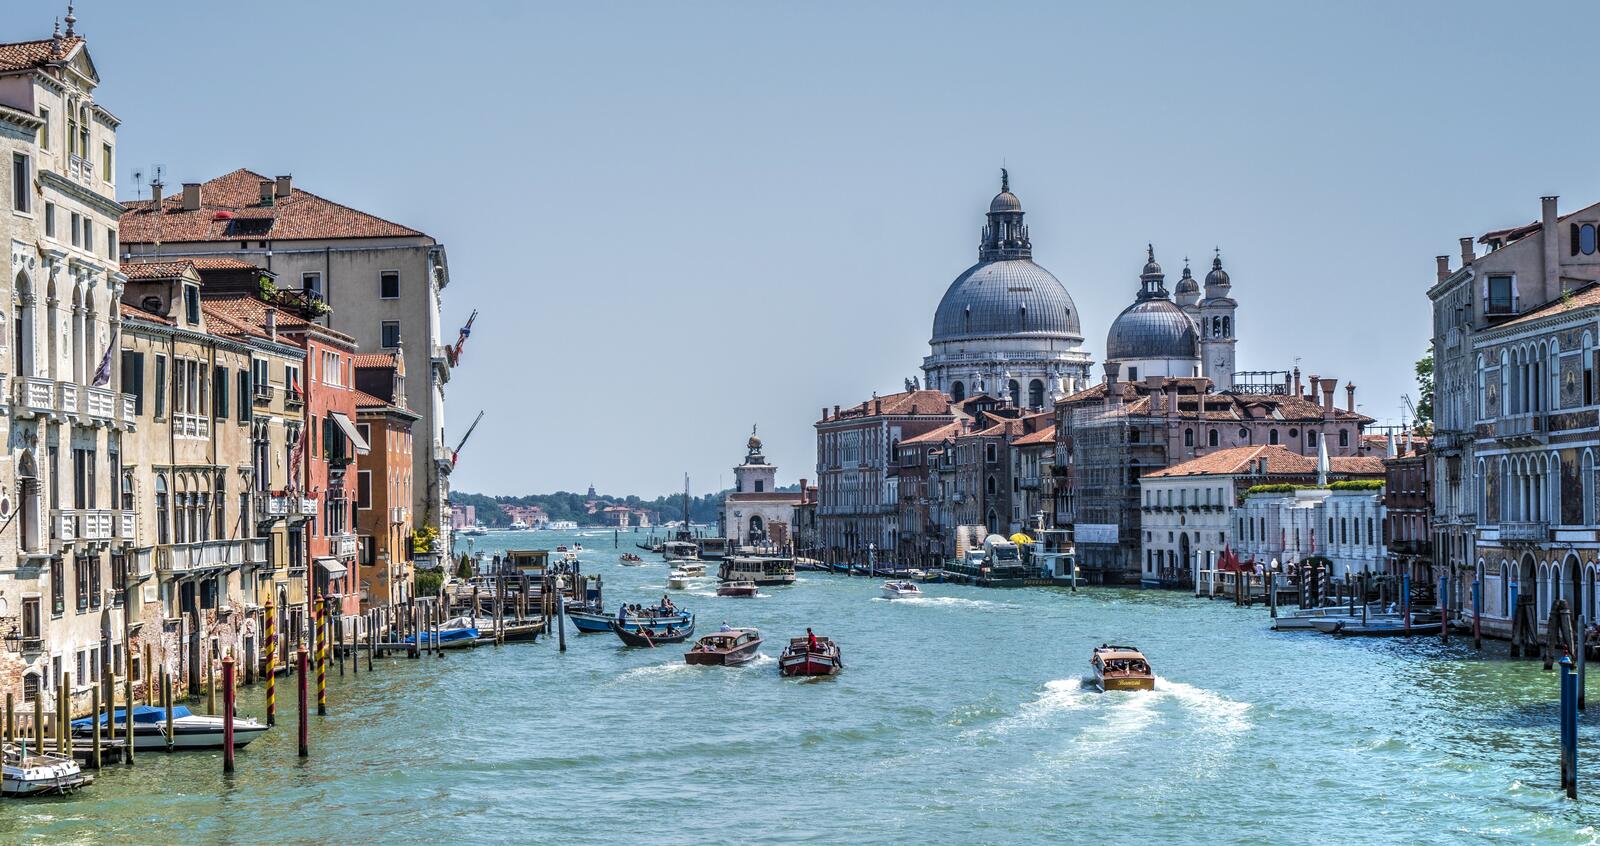 Обои Grand Canal Venice Венеция на рабочий стол